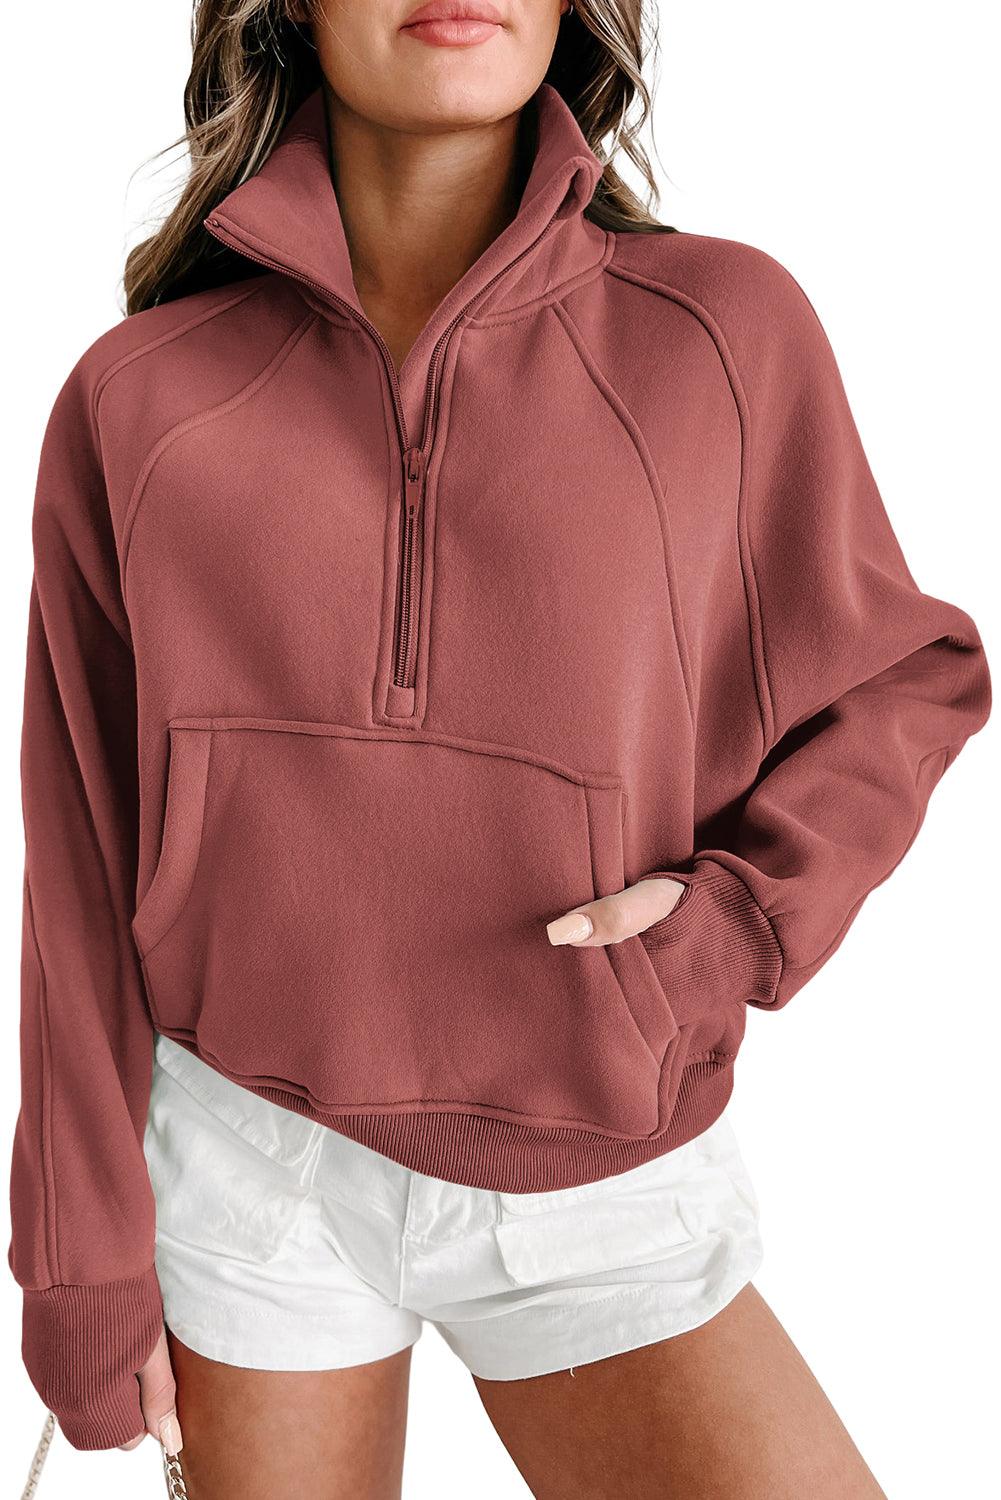 Brown Zip Up Stand Collar Ribbed Thumbhole Sleeve Sweatshirt - L & M Kee, LLC